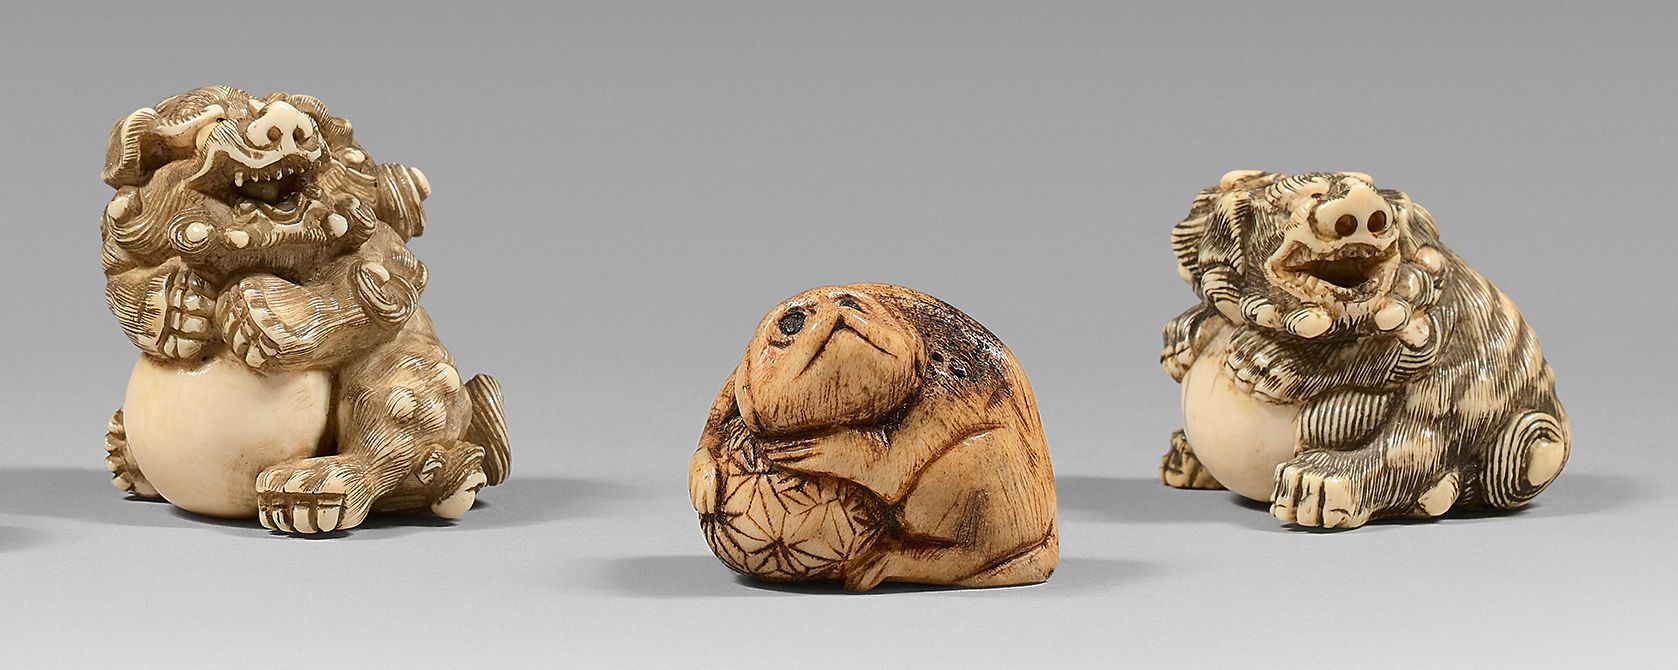 JAPON - Époque EDO (1603-1868) 三件网饰，两件为象牙材质，描绘坐着的拿着球的狮子，一件为鹿茸材质，坐着的狗，眼睛镶嵌着。
高：3.&hellip;